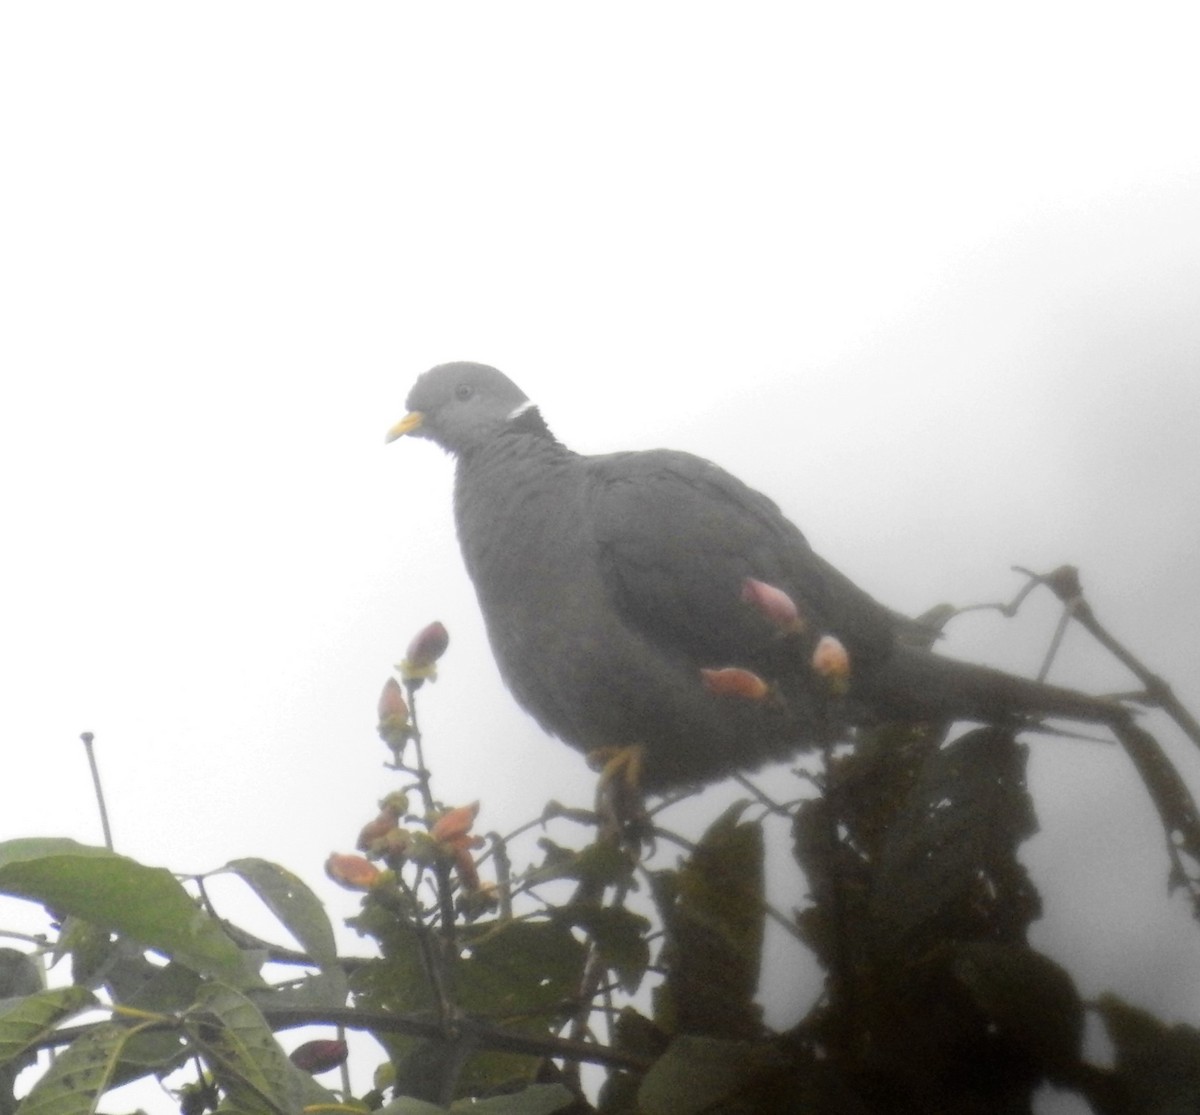 Band-tailed Pigeon - John Licharson